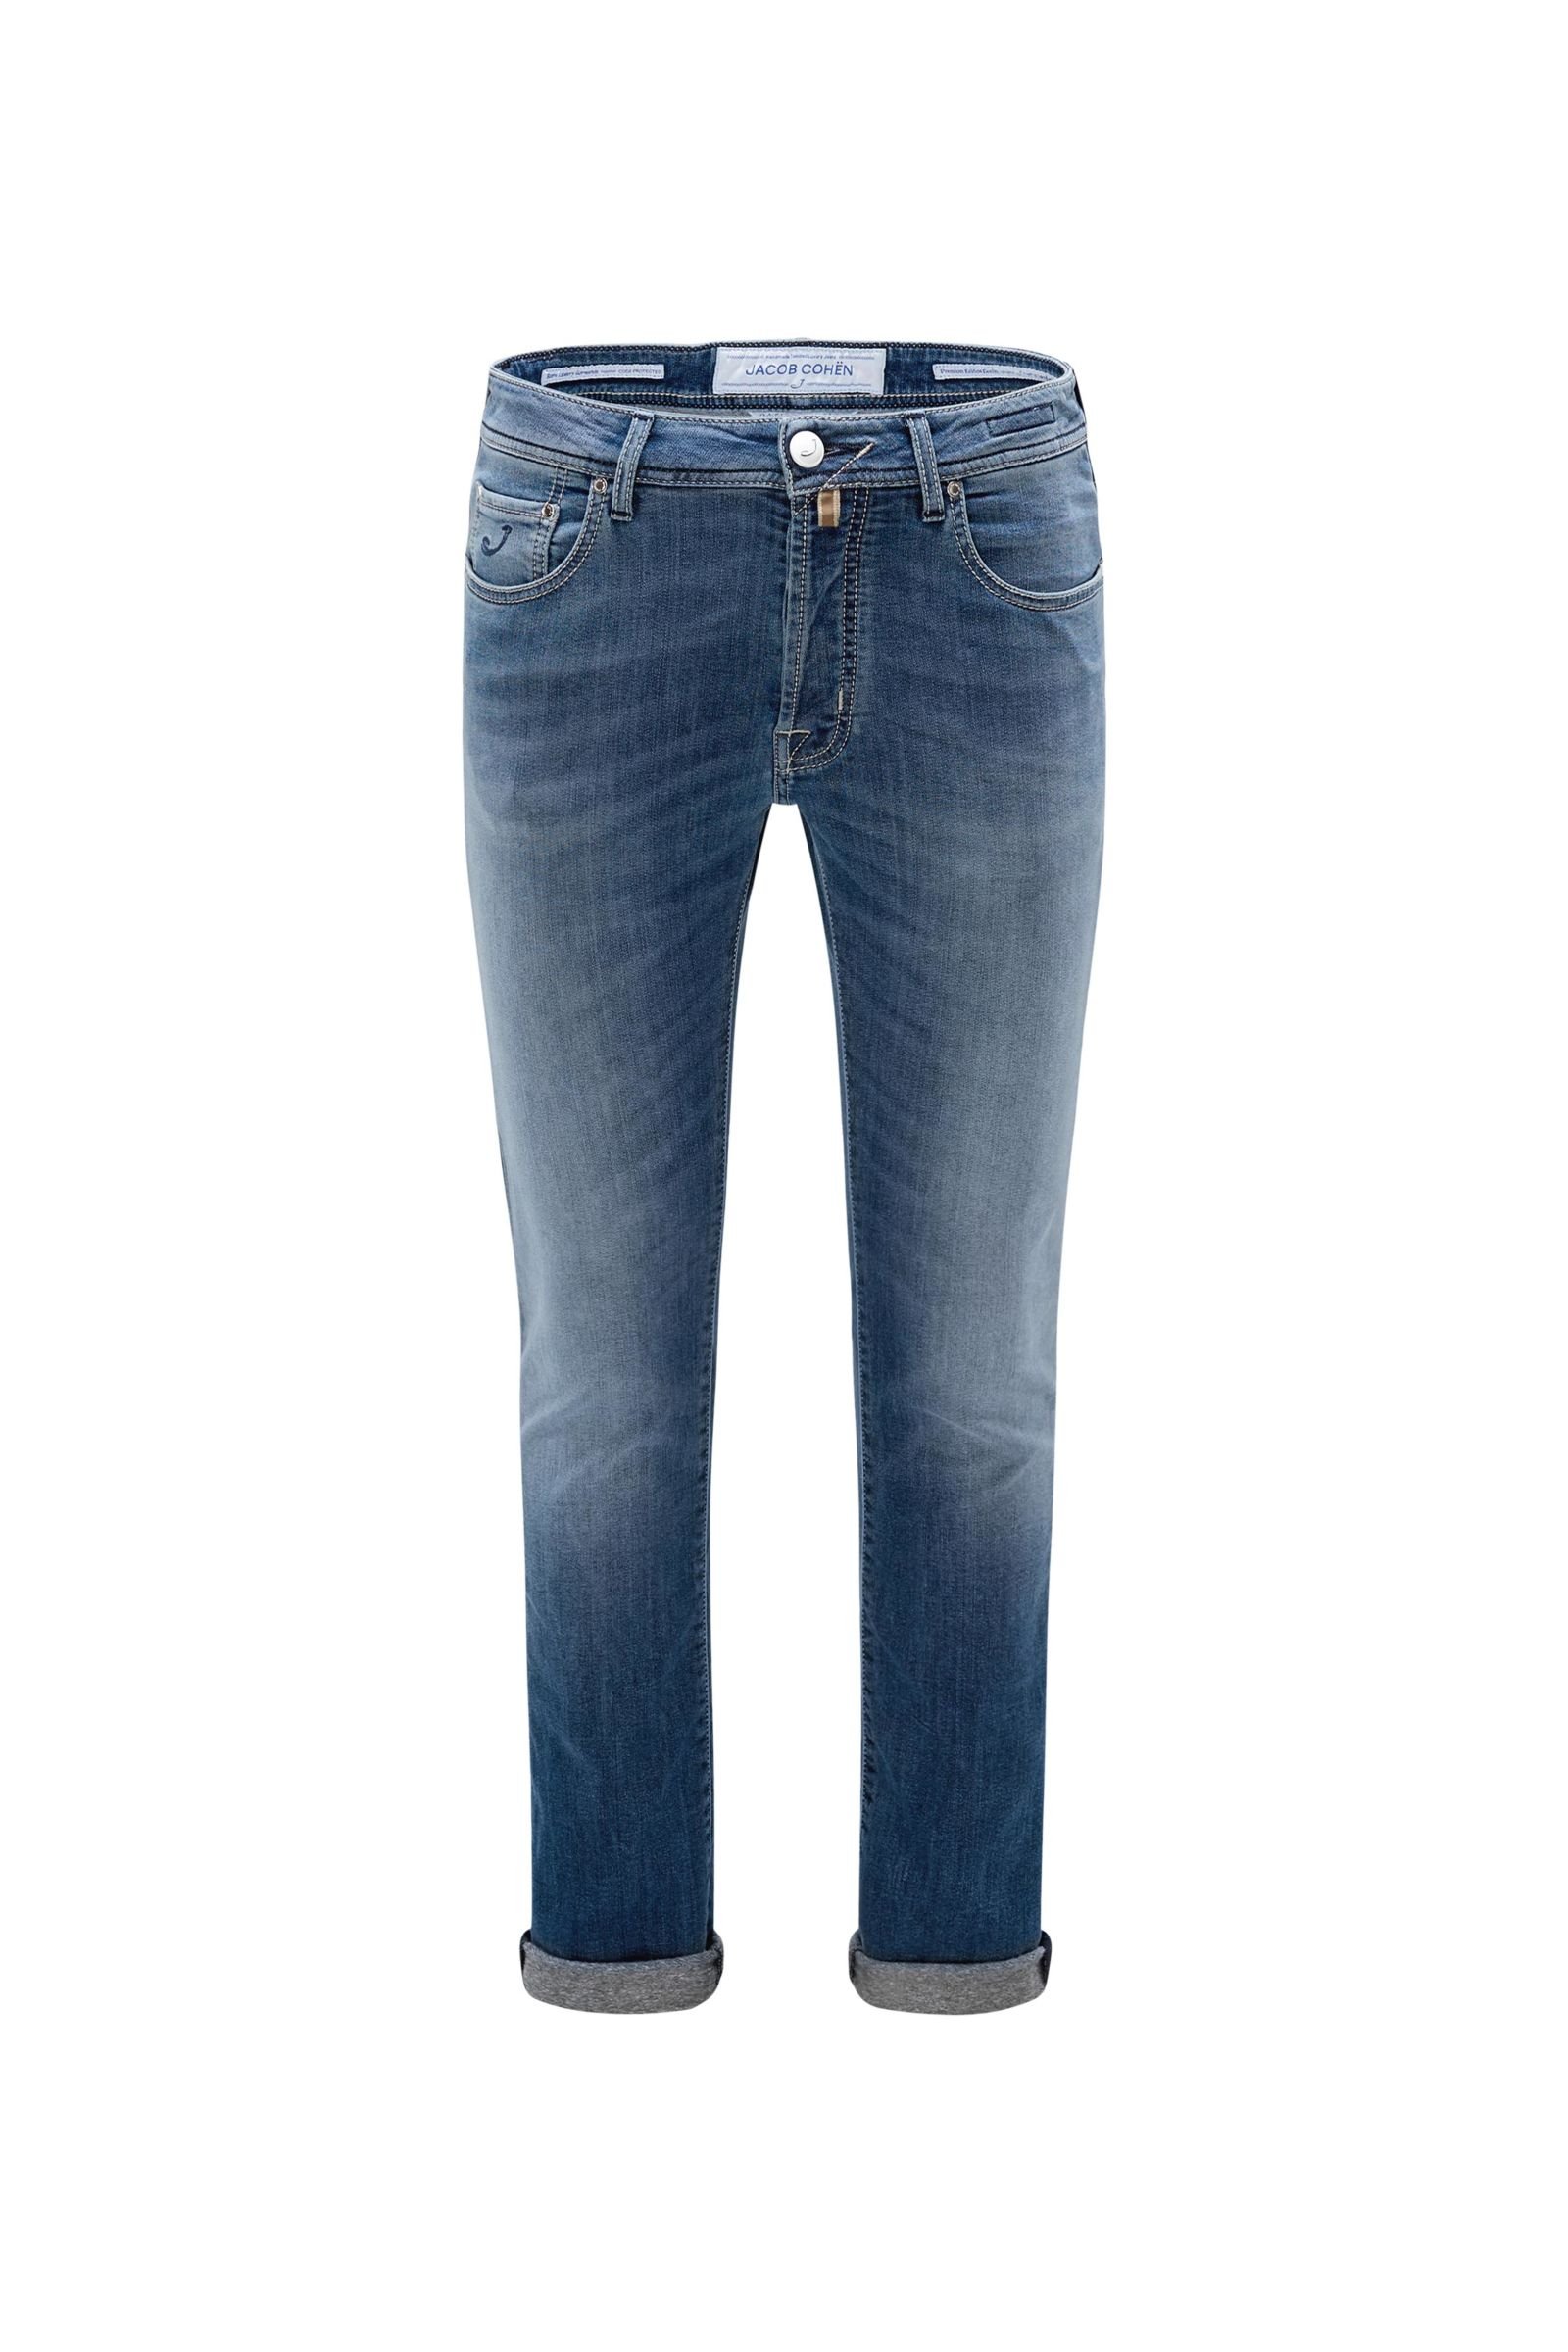 Jeans 'J688 Comfort Slim Fit' smoky blue